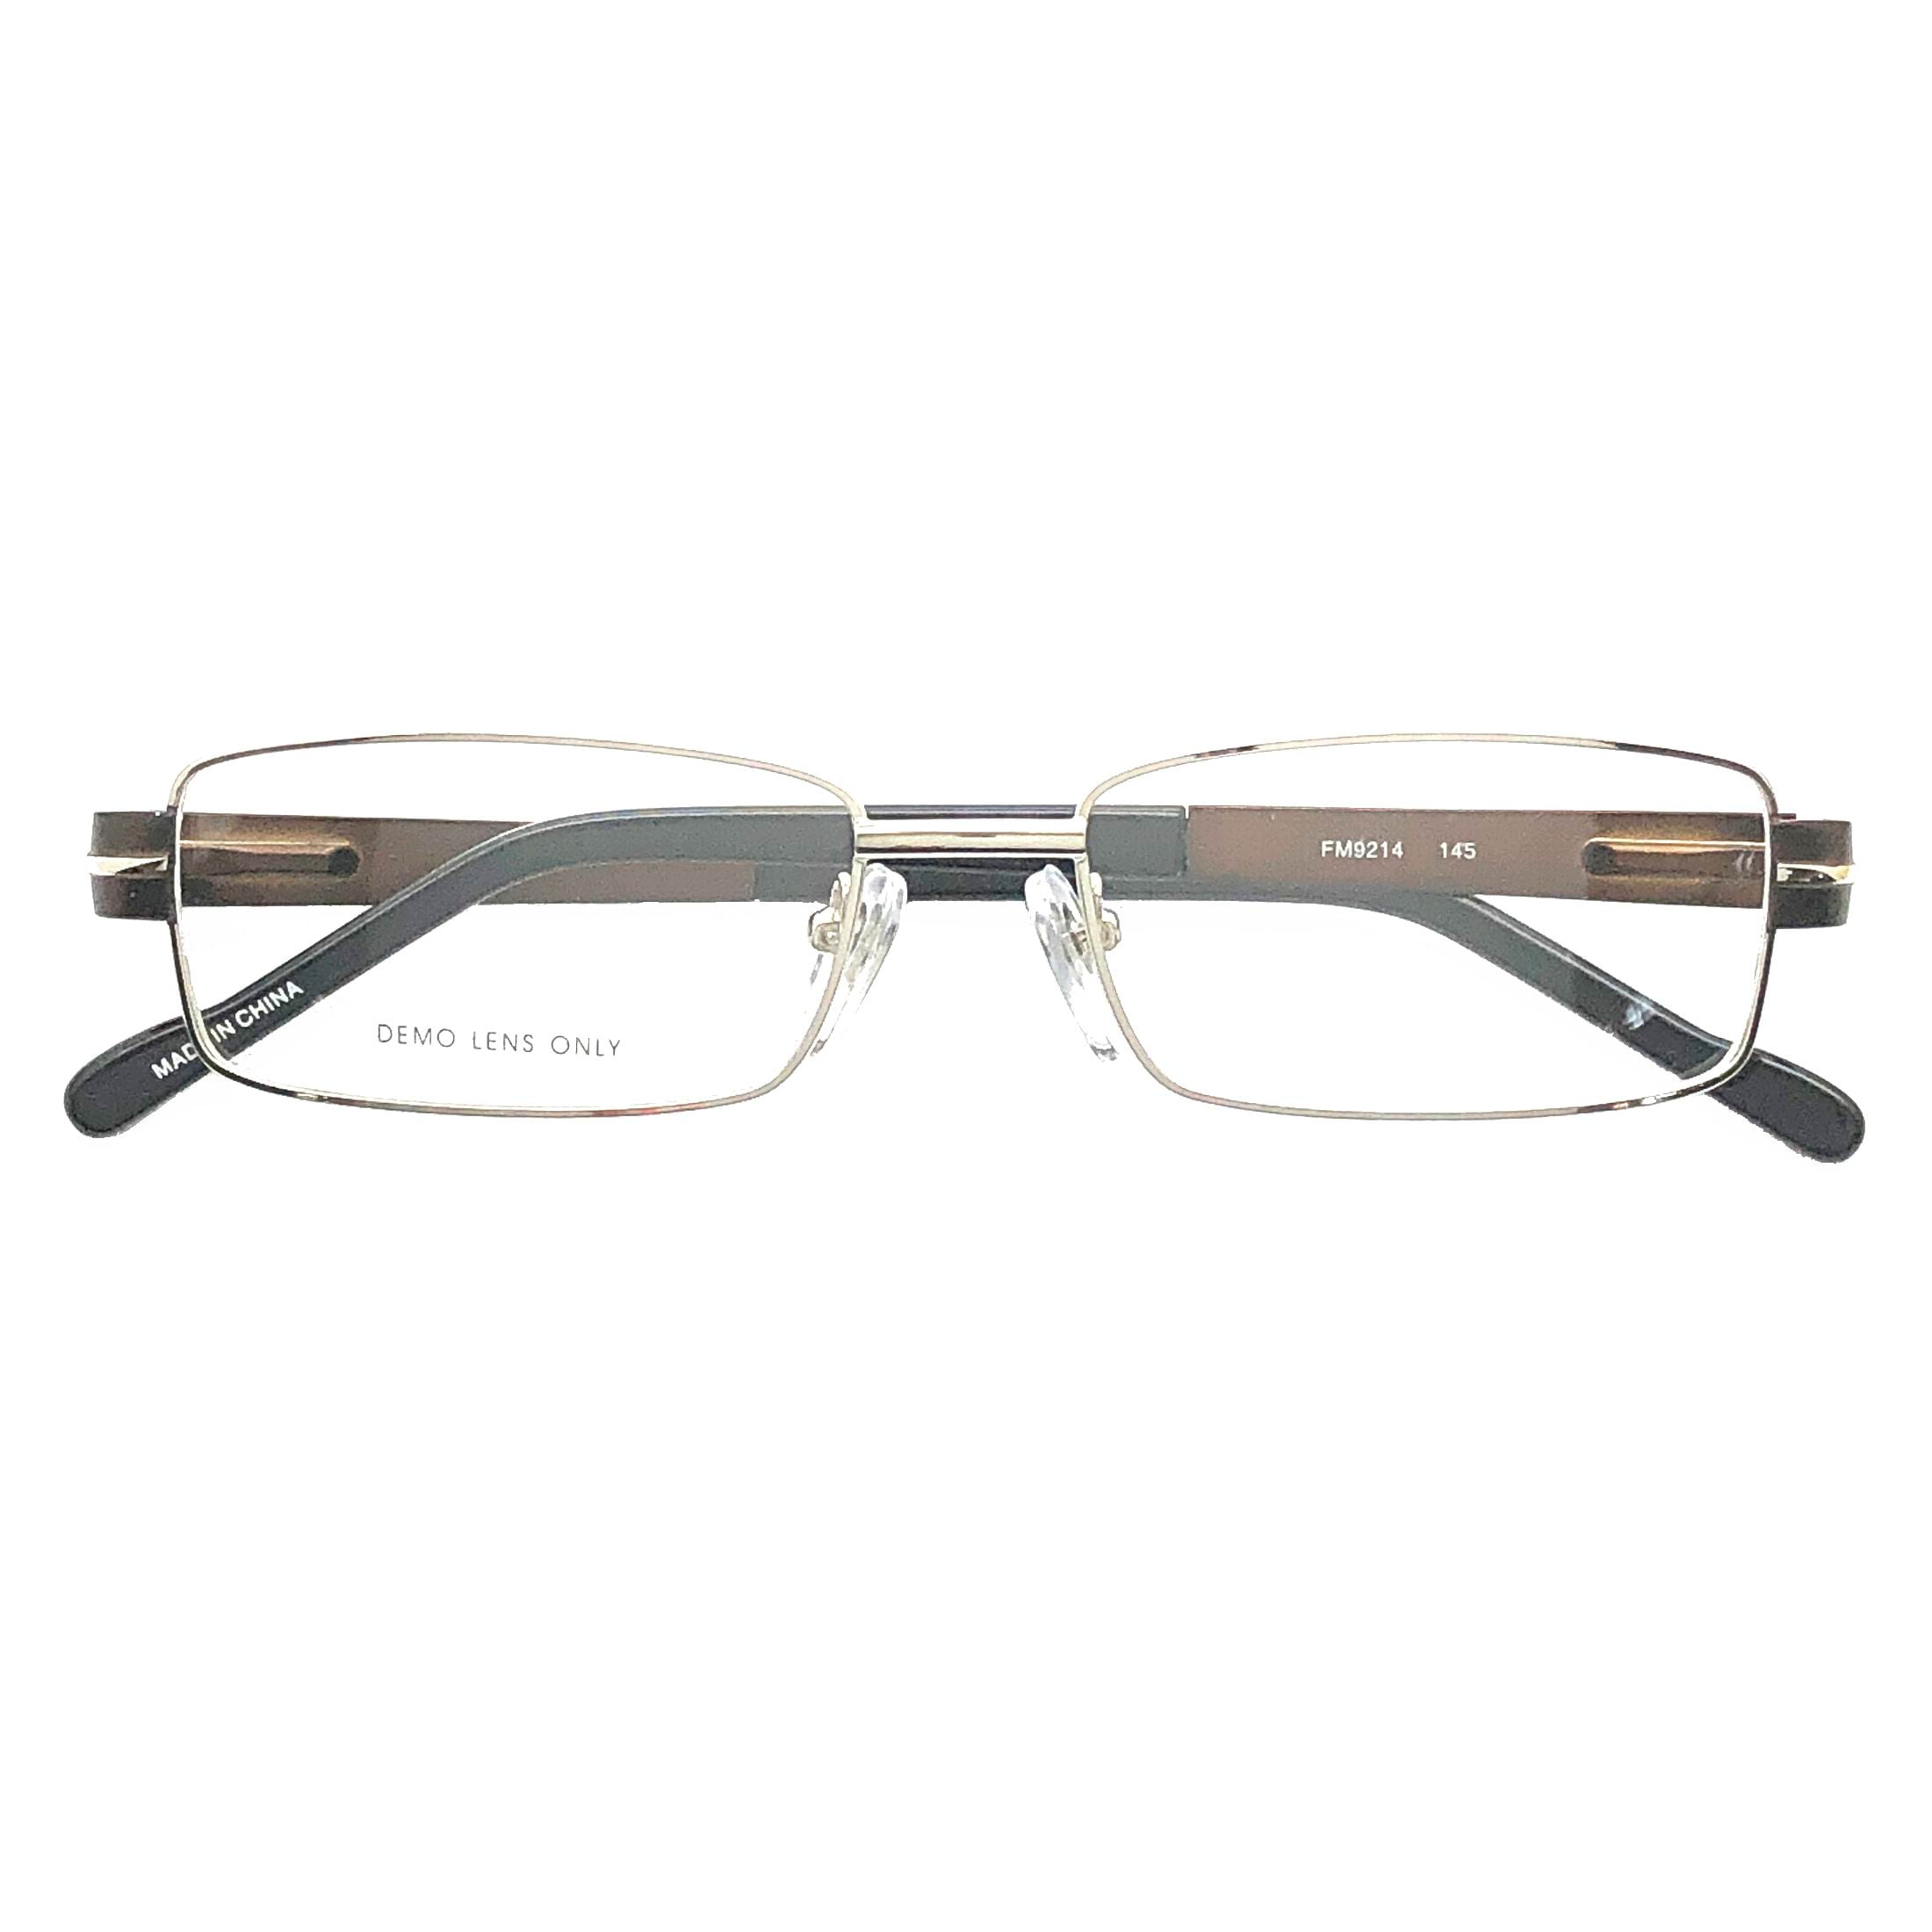 10pcs Aluminium Lockable 12/14 Frames Eyewear Eyeglasses